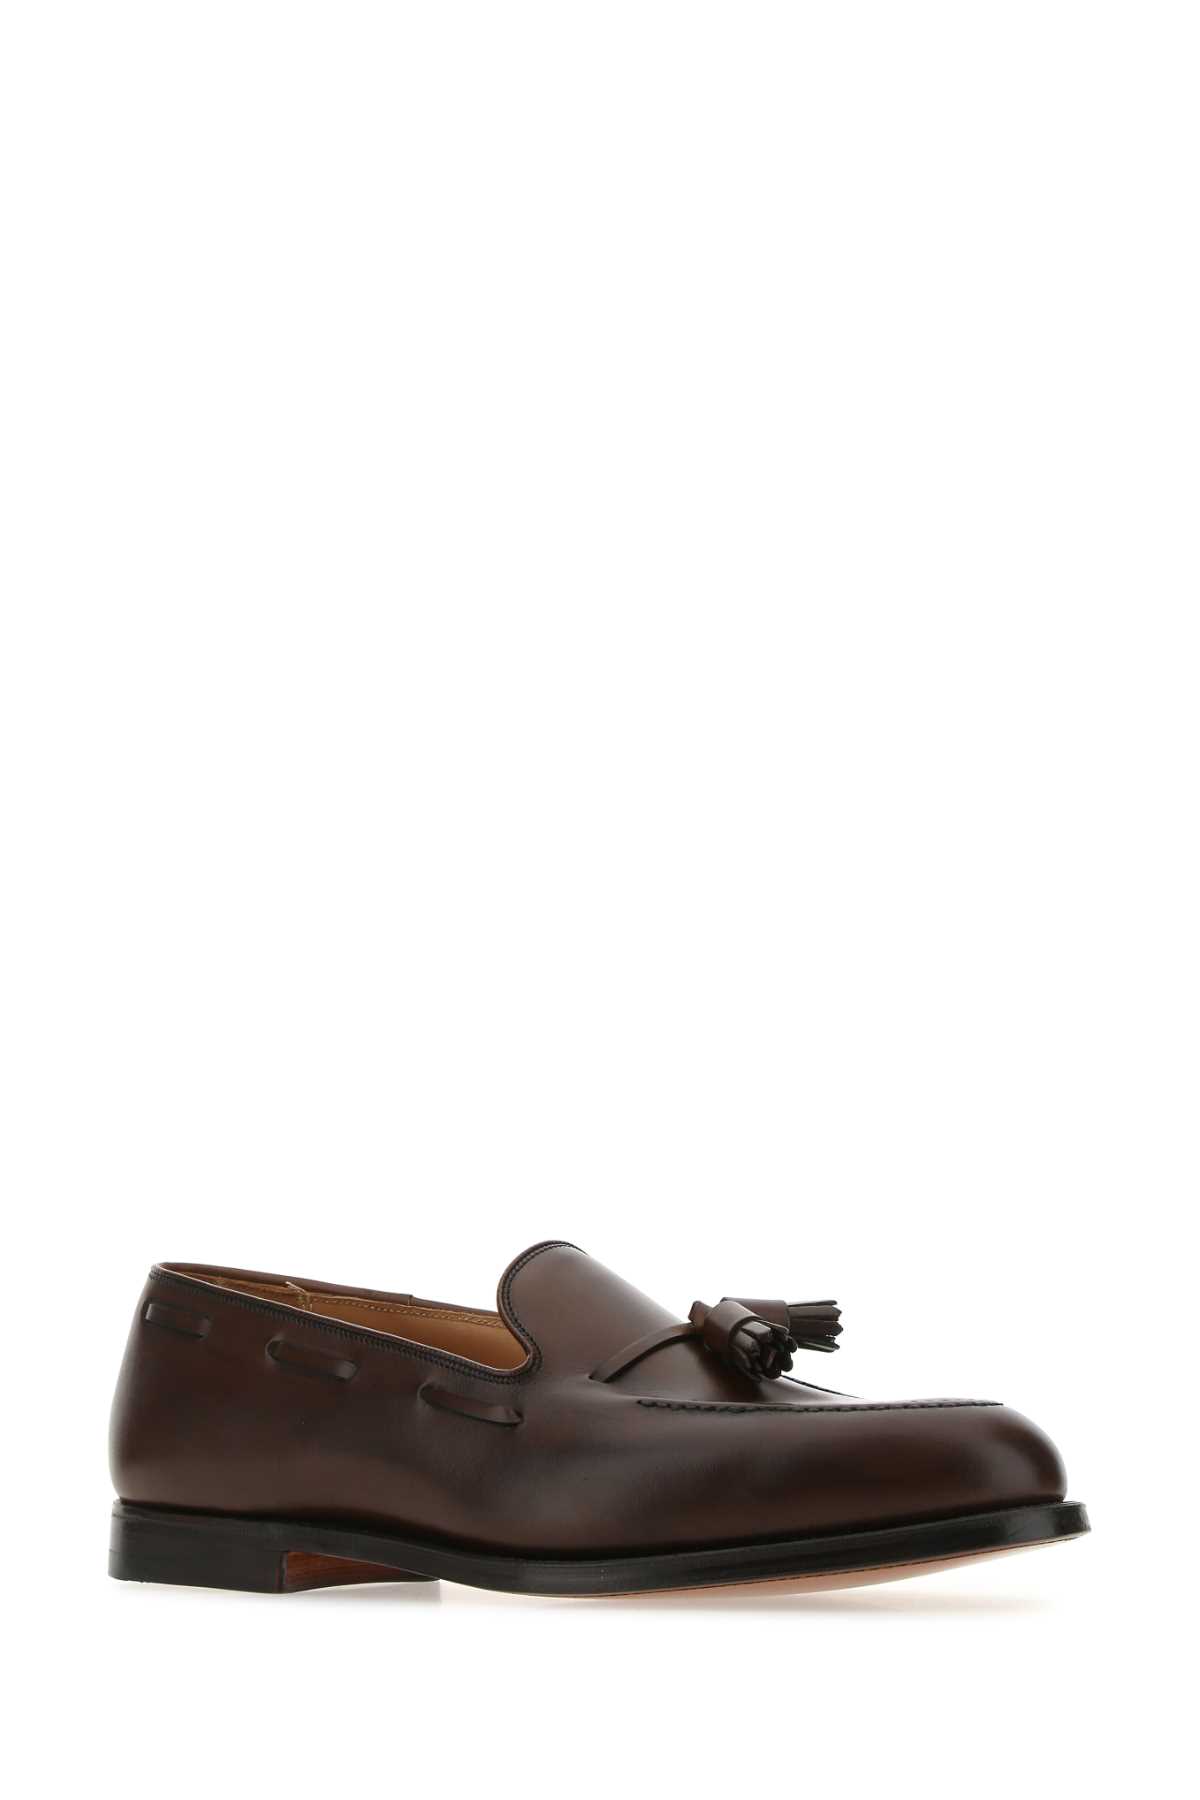 Crockett &amp; Jones Chocolate Leather Cavendish 2 Loafers In Darkbrown